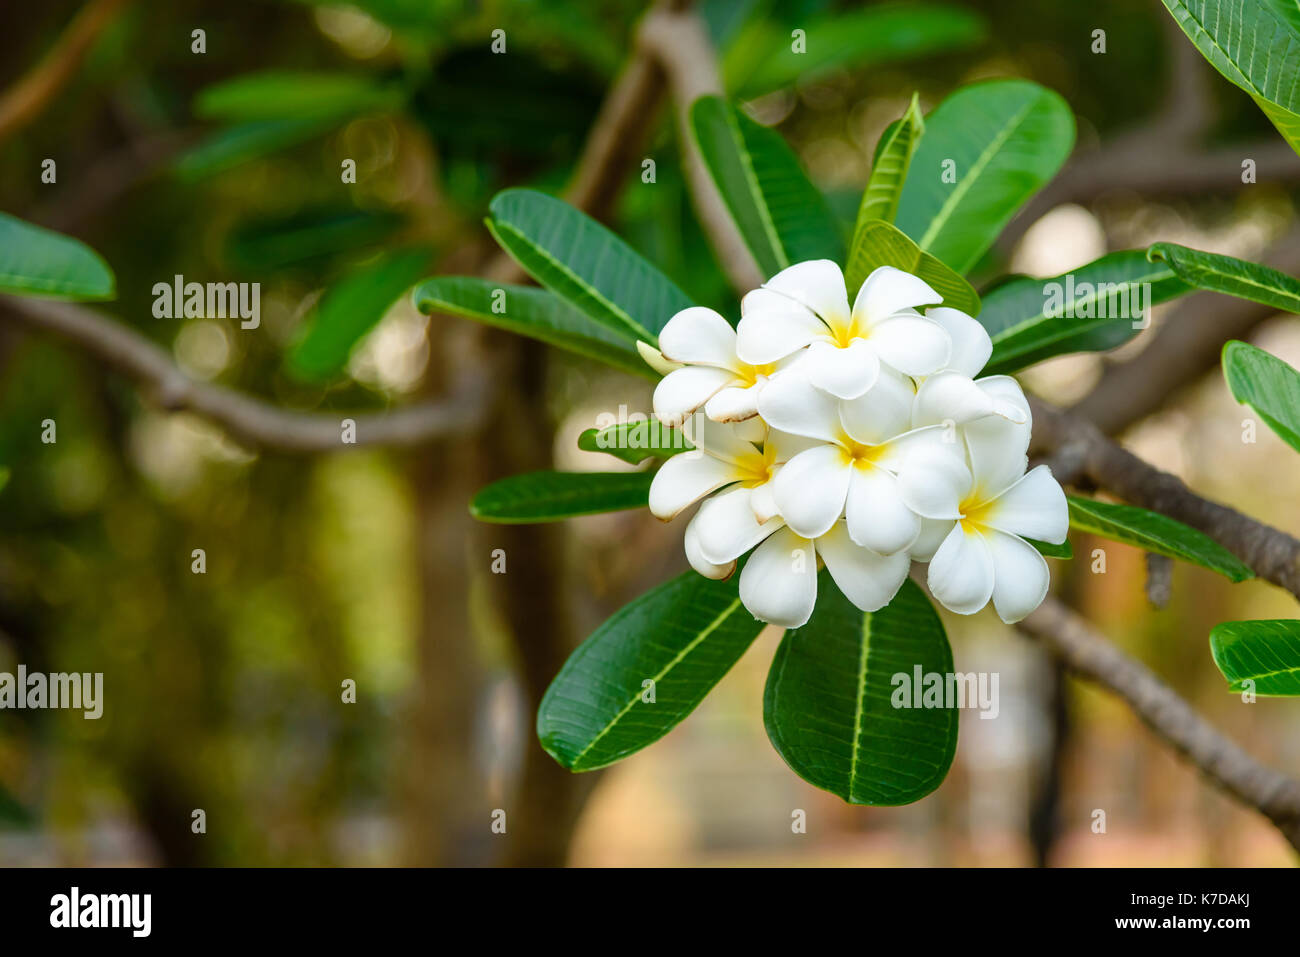 Beautiful White and yellow Frangipani flowers, Apocynaceae Family Stock Photo